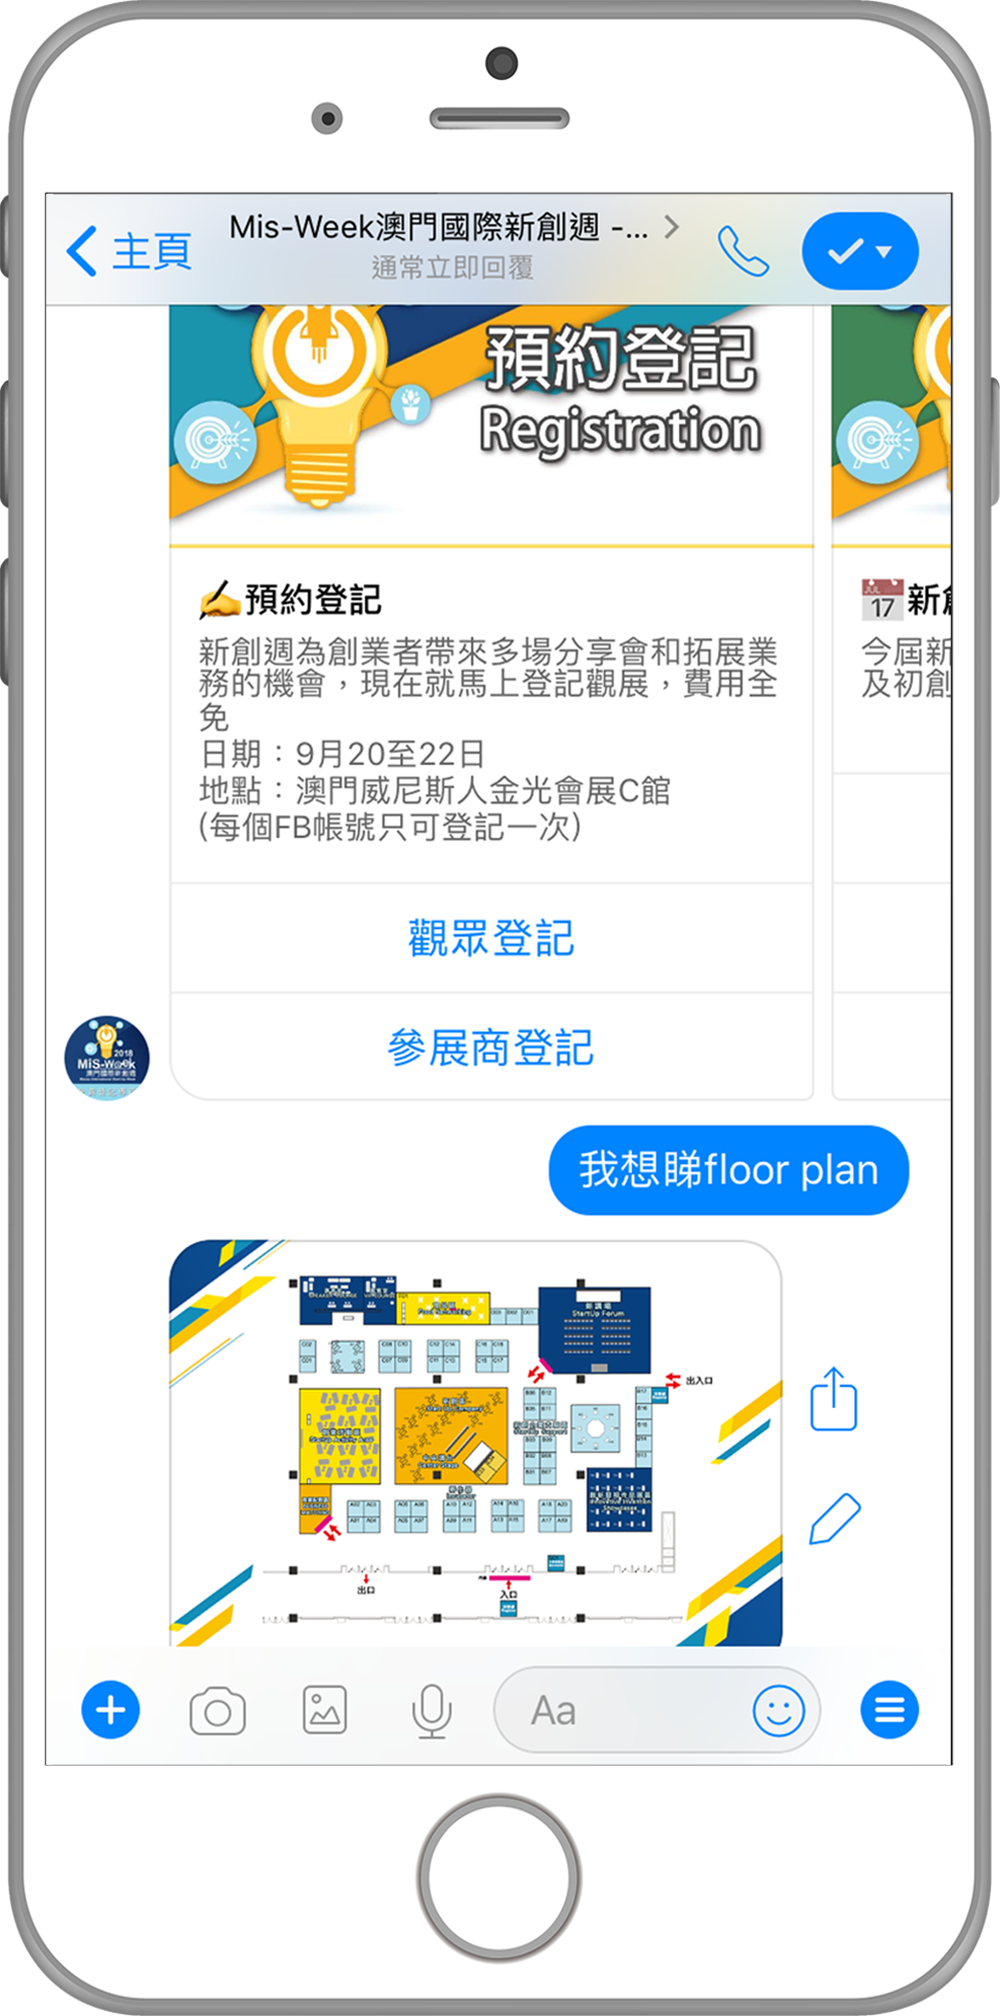 SignHUB - Macao International Start-Up Week Chatbot